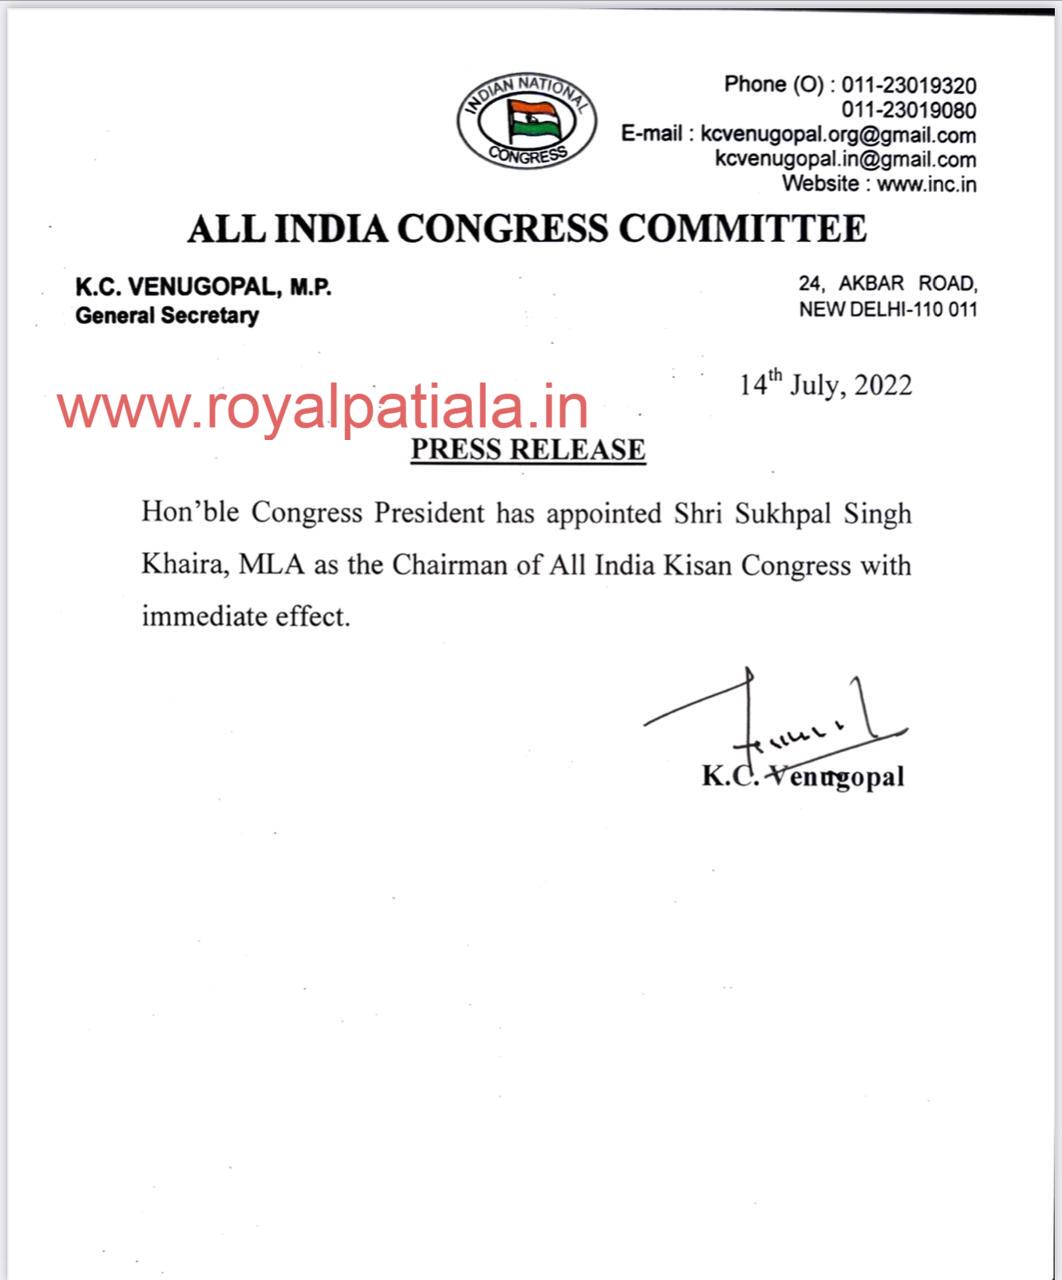 Congress gives major responsibility to Sukhpal Khaira